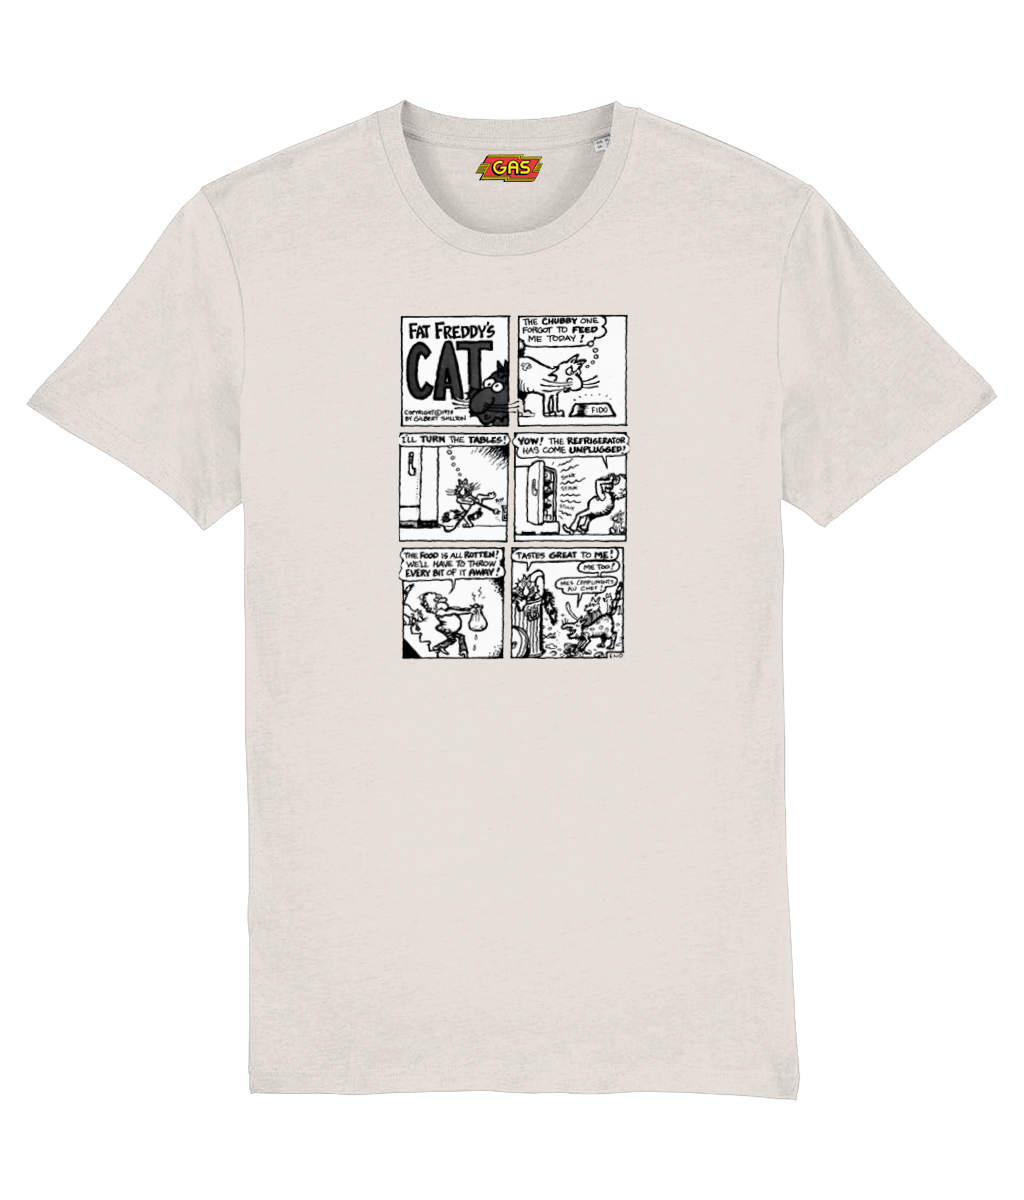 Fat Freddy's Cat-Fridge Cartoon-Gilbert Shelton 1969-Retro-GAS T Shirts-HG04